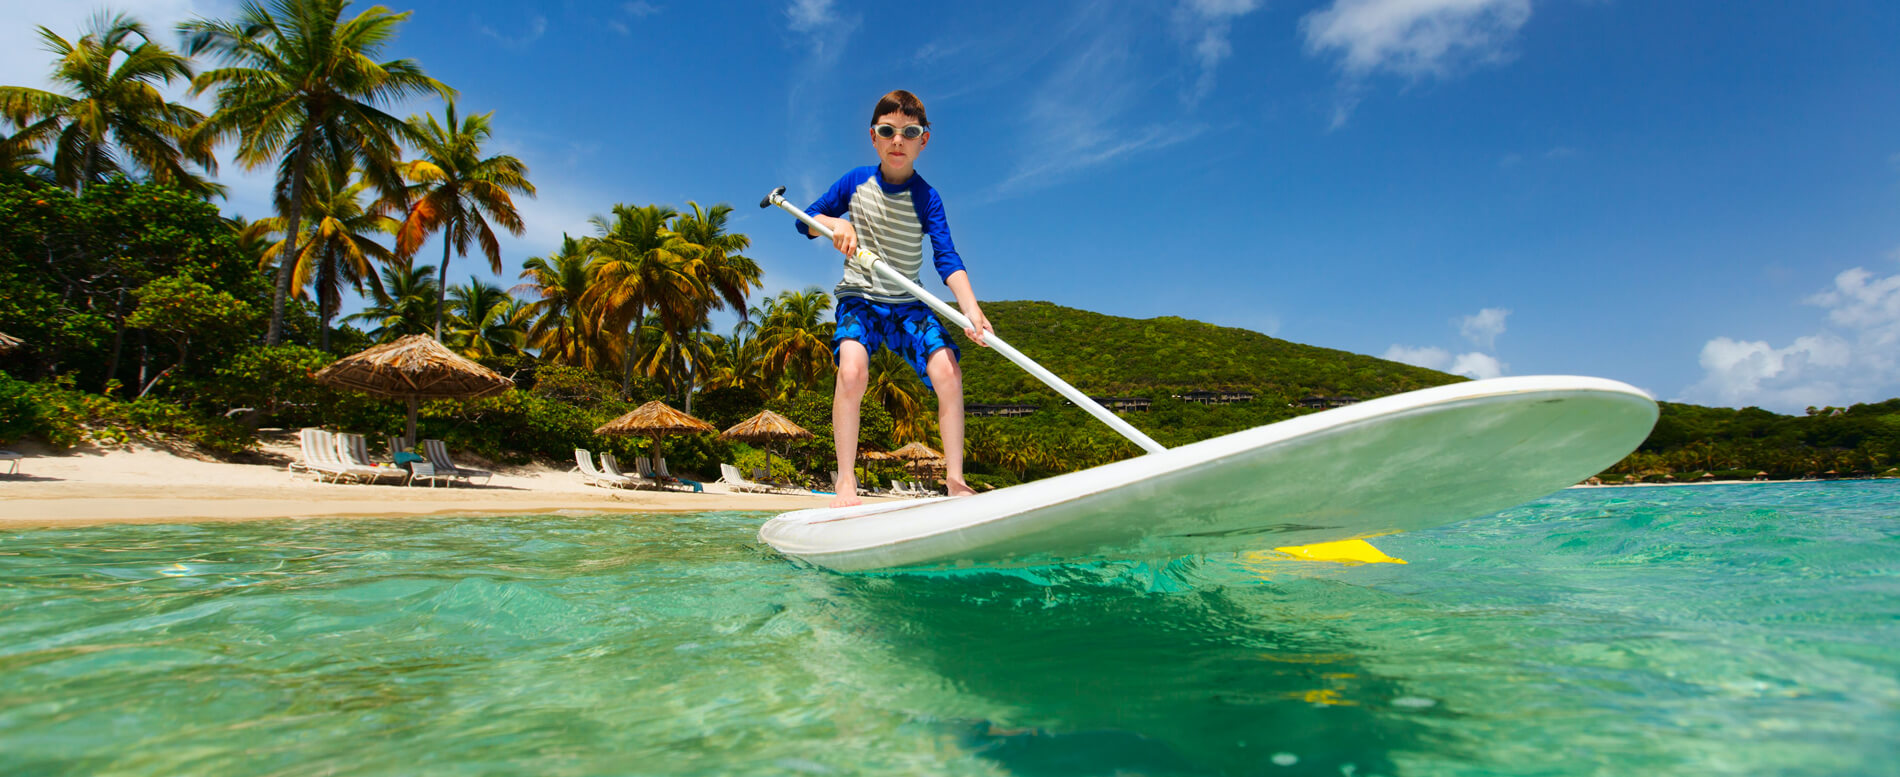 Best kids paddle board buyers guide